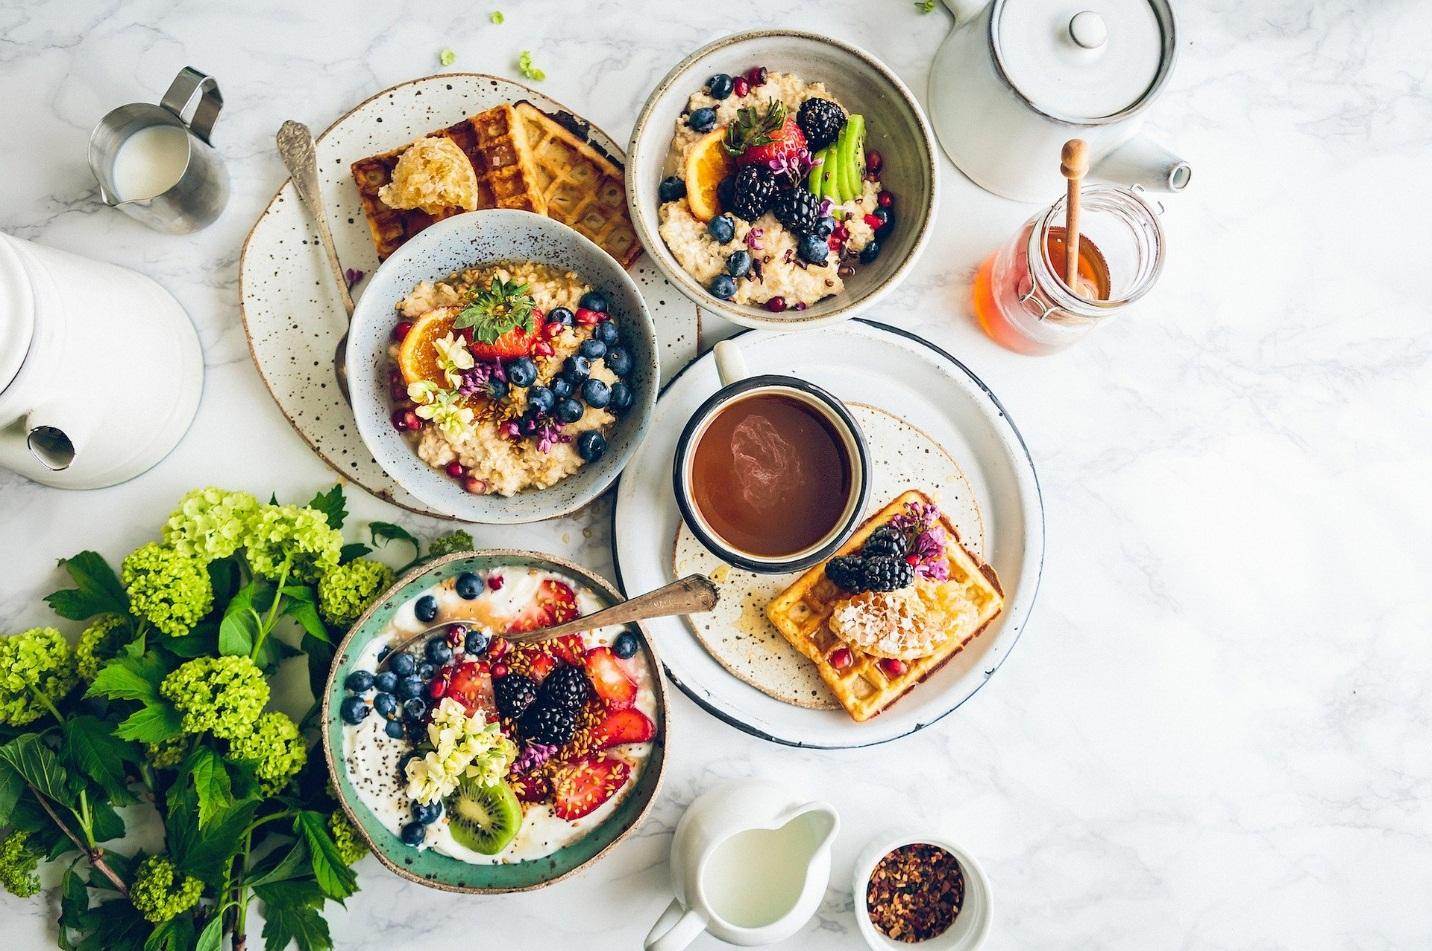 https://pixabay.com/photos/food-breakfast-table-healthy-green-2569257/ 